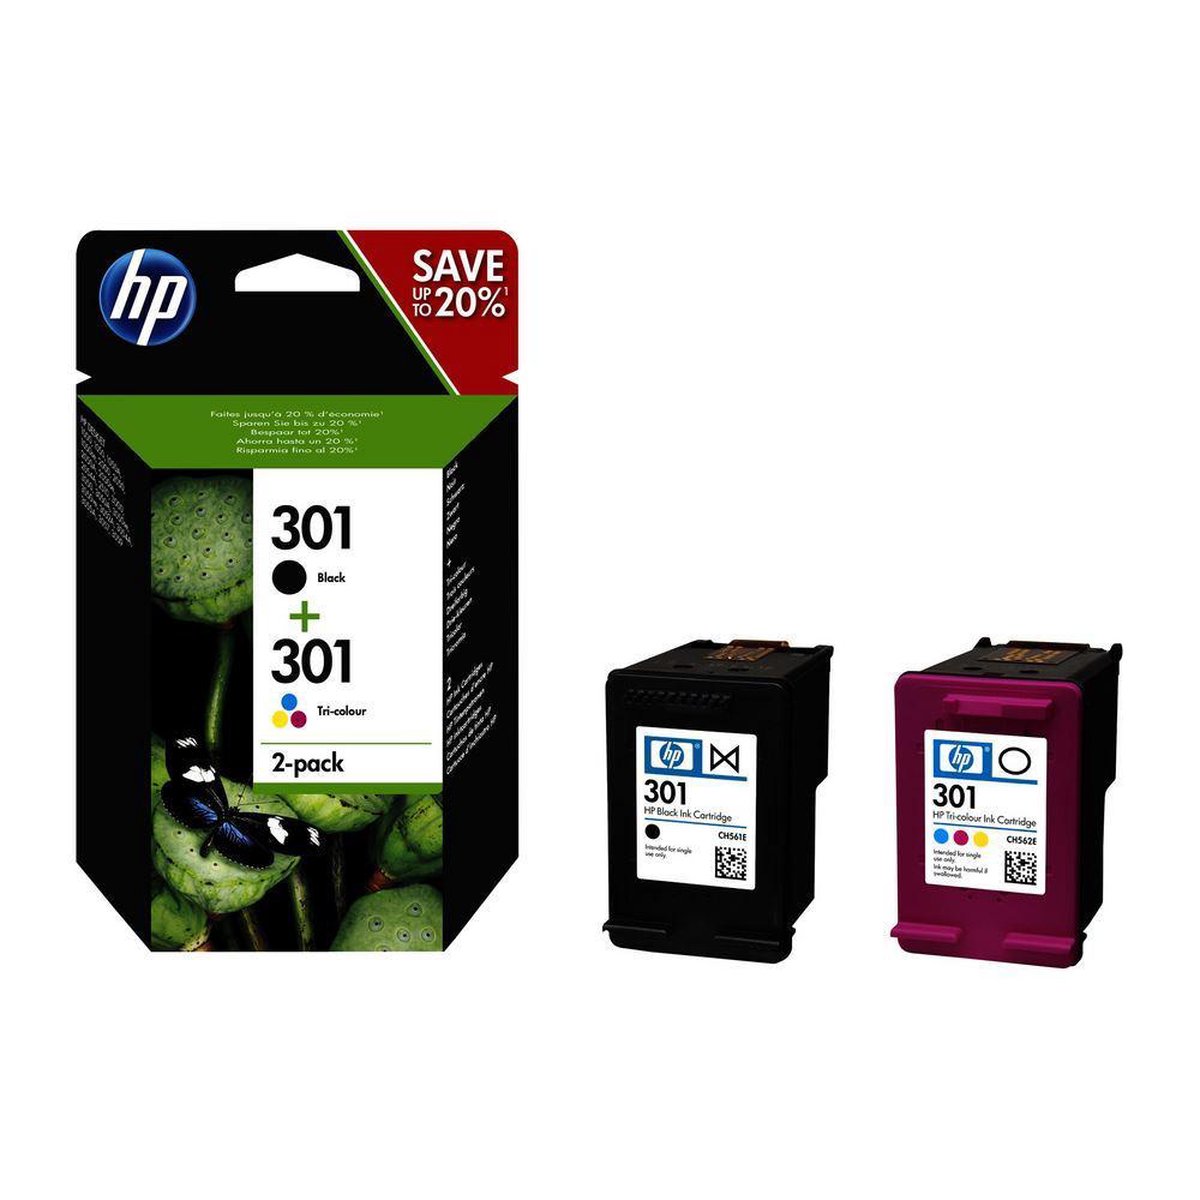 Plons escort Ga wandelen HP 301 - Inktcartridges- Zwart - Kleur - Dual-Pack | bol.com